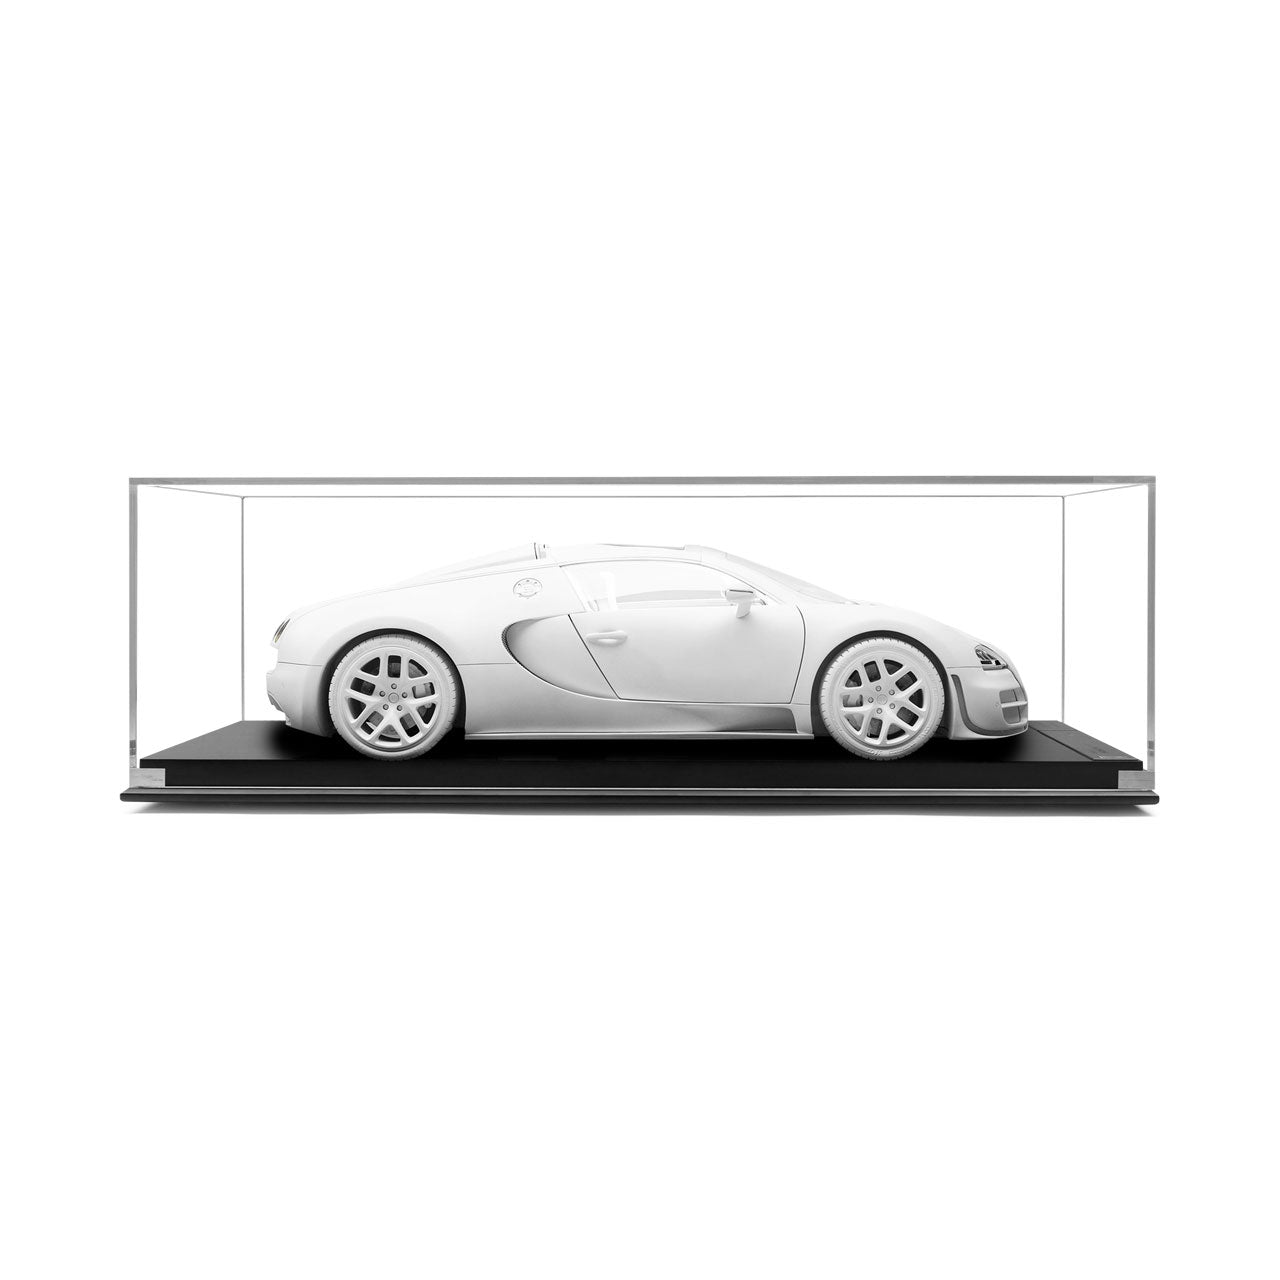 Bugatti Veyron Grand Sport Vitesse 1:8 Scale Model